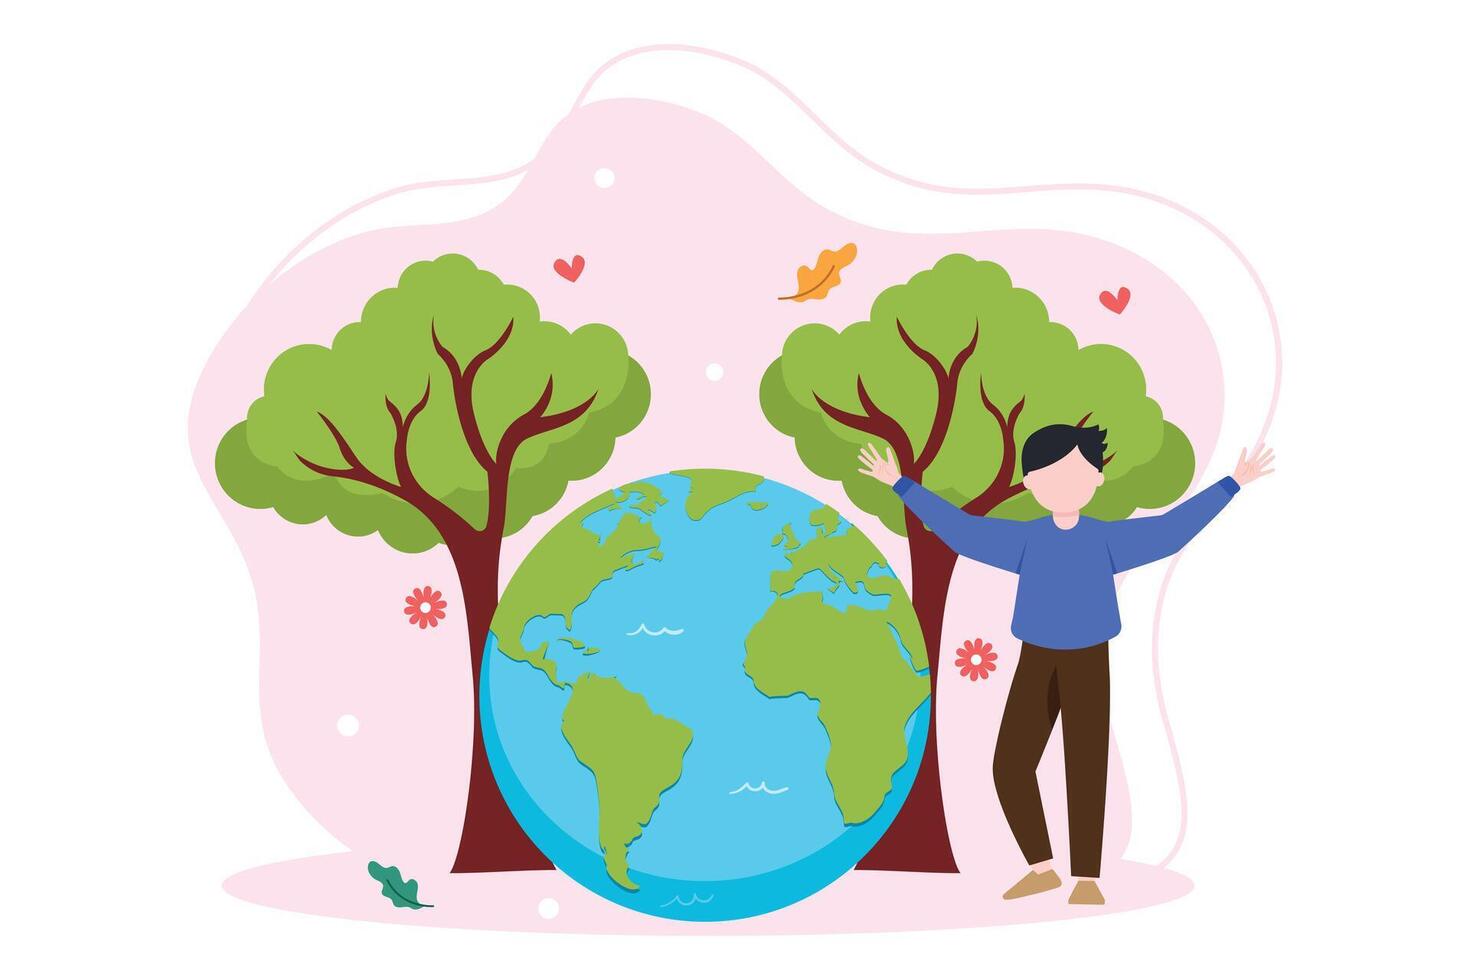 Earth Day Flat Illustration Design vector